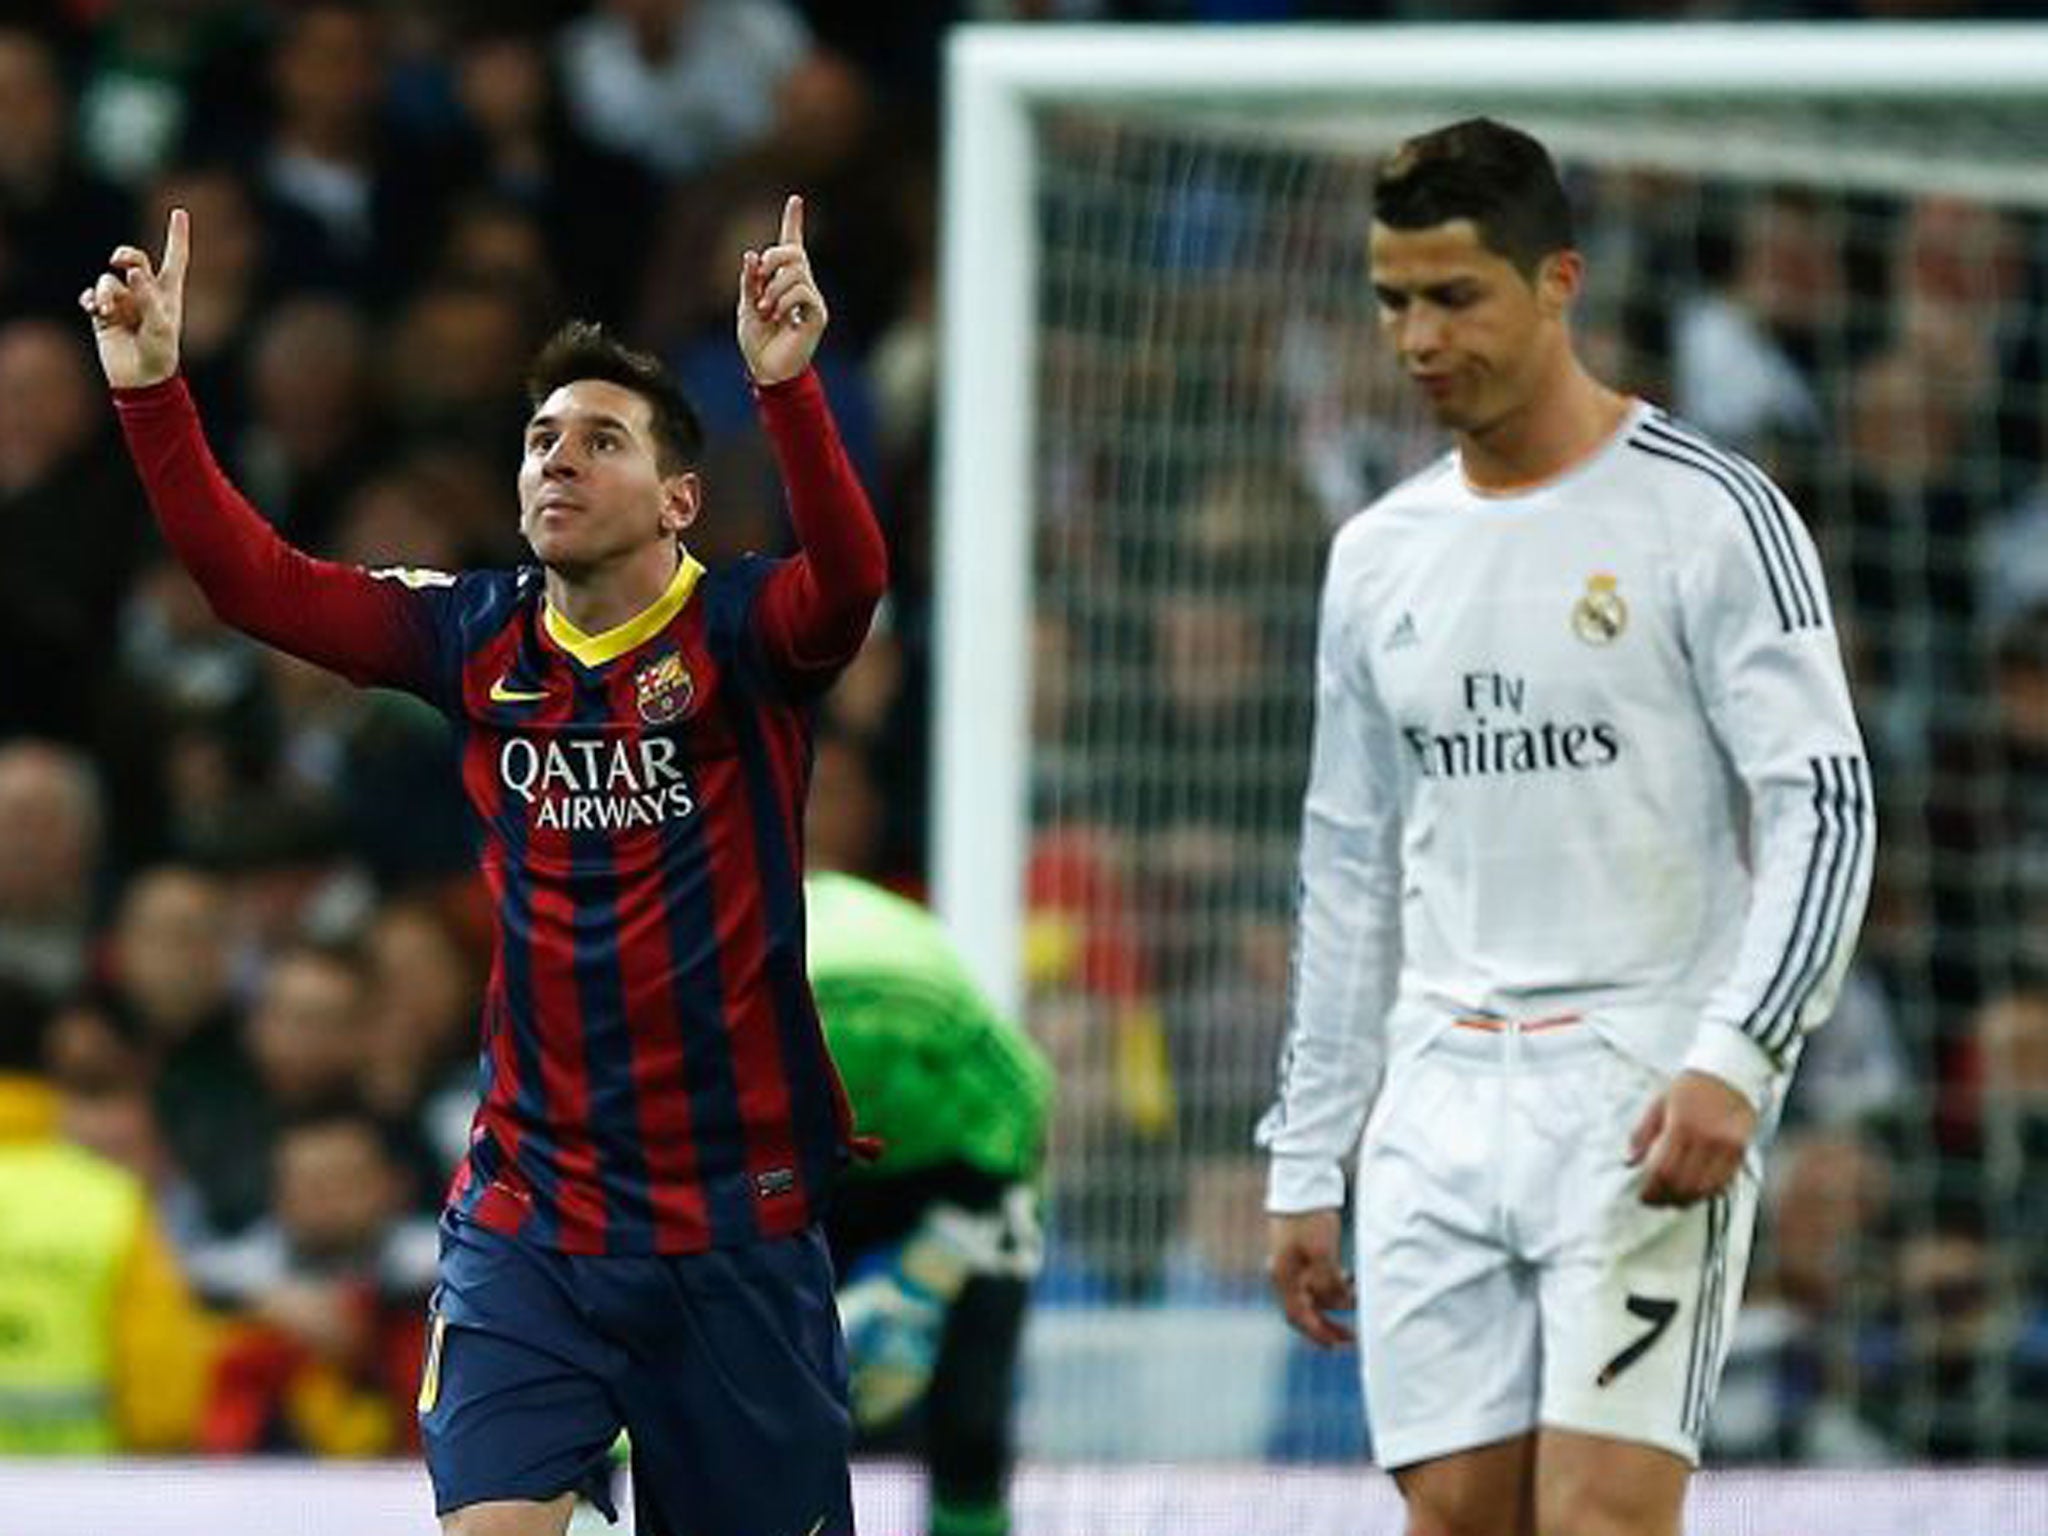 Lionel Messi celebrates scoring Barcelona's third goal as a downbeat Cristiano Ronaldo looks on